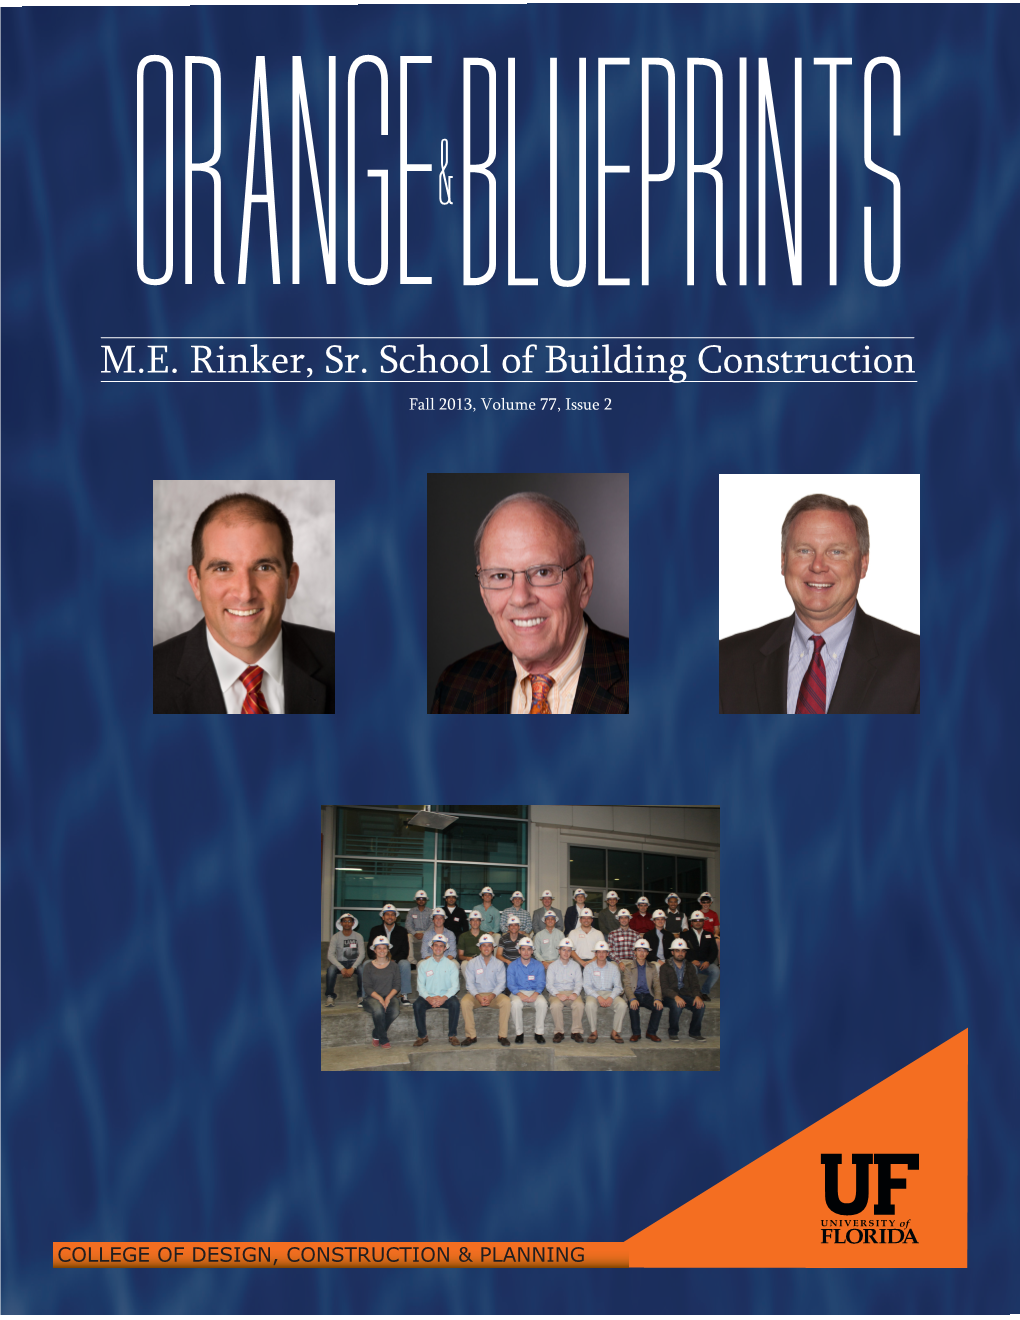 M.E. Rinker, Sr. School of Building Construction Fall 2013, Volume 77, Issue 2